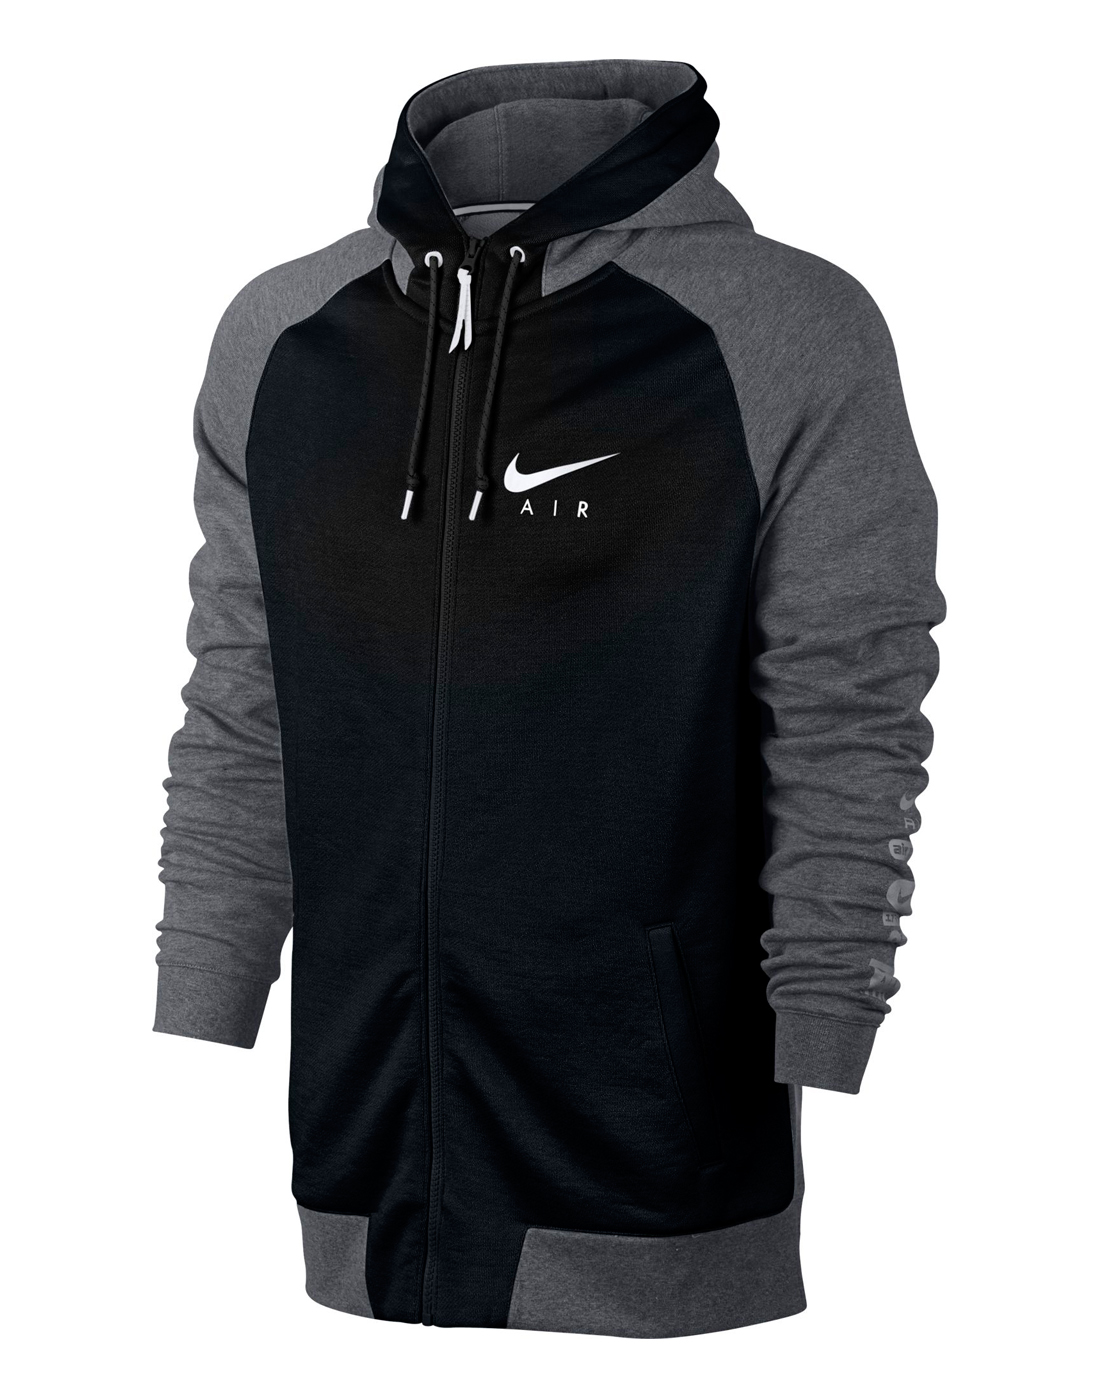 Nike Mens Air Hybrid Hoody - Grey | Life Style Sports UK